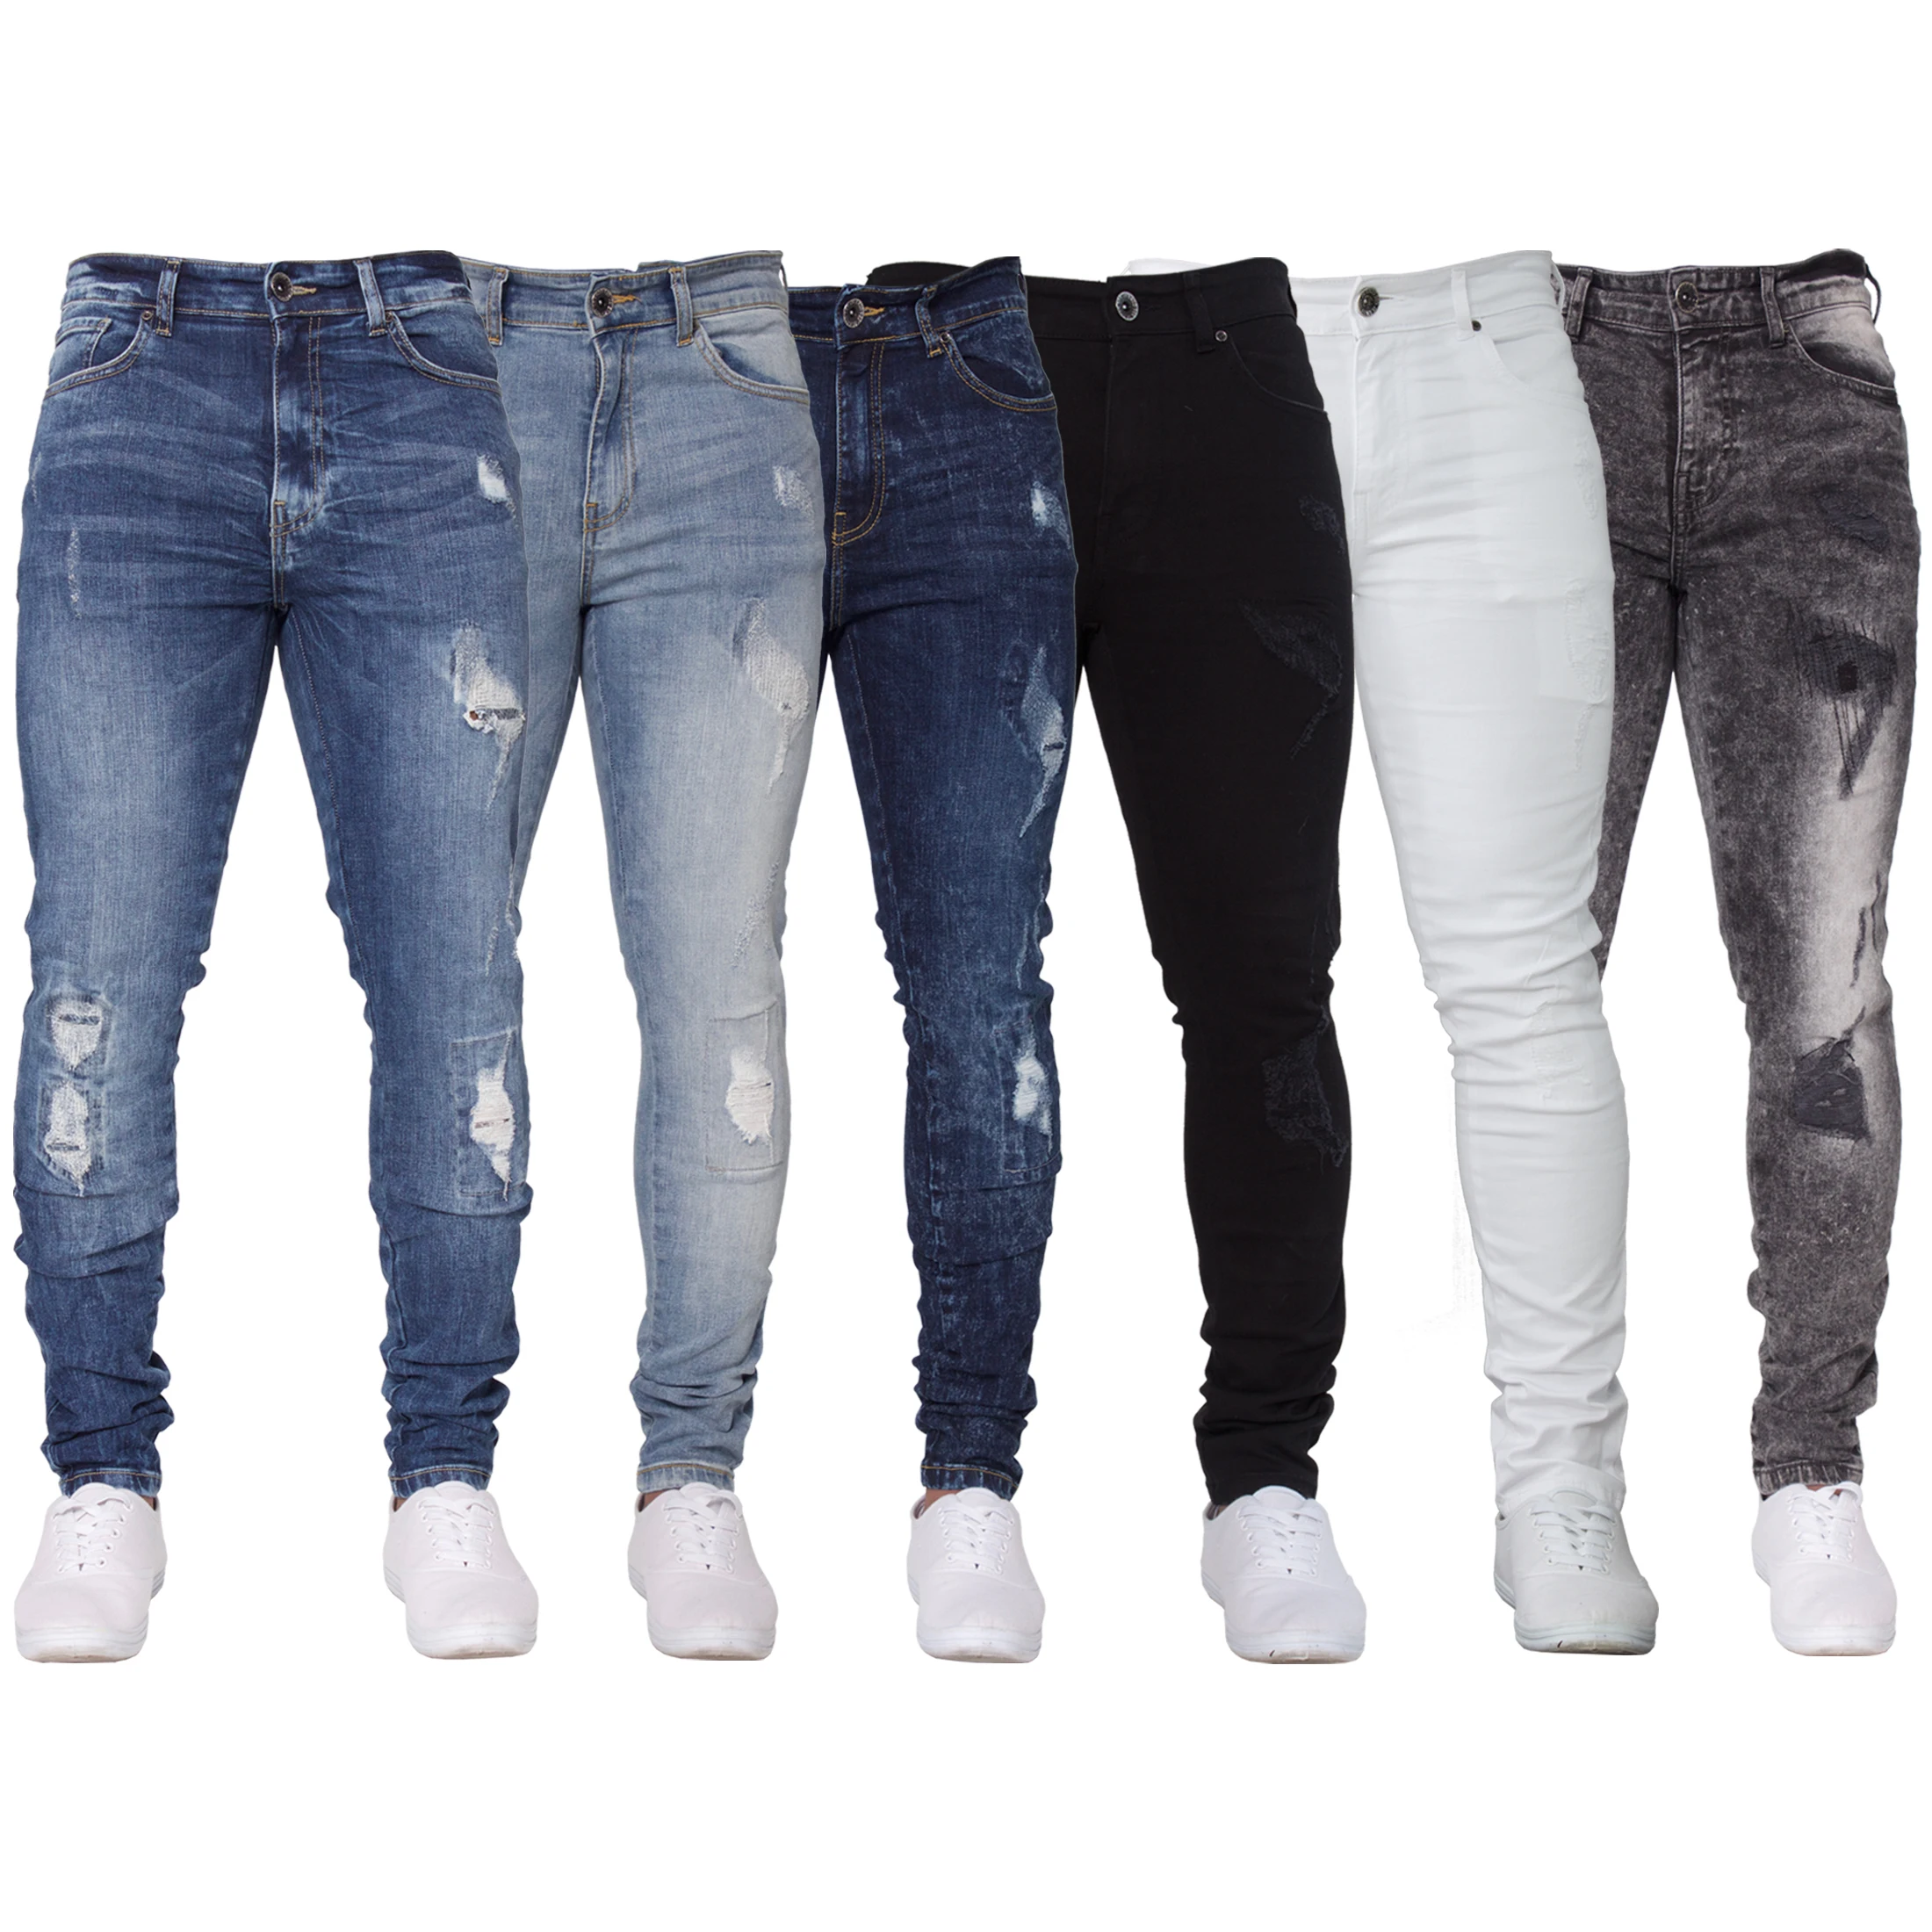 Trending Jeans,Men Jeans,Jeans Trousers 